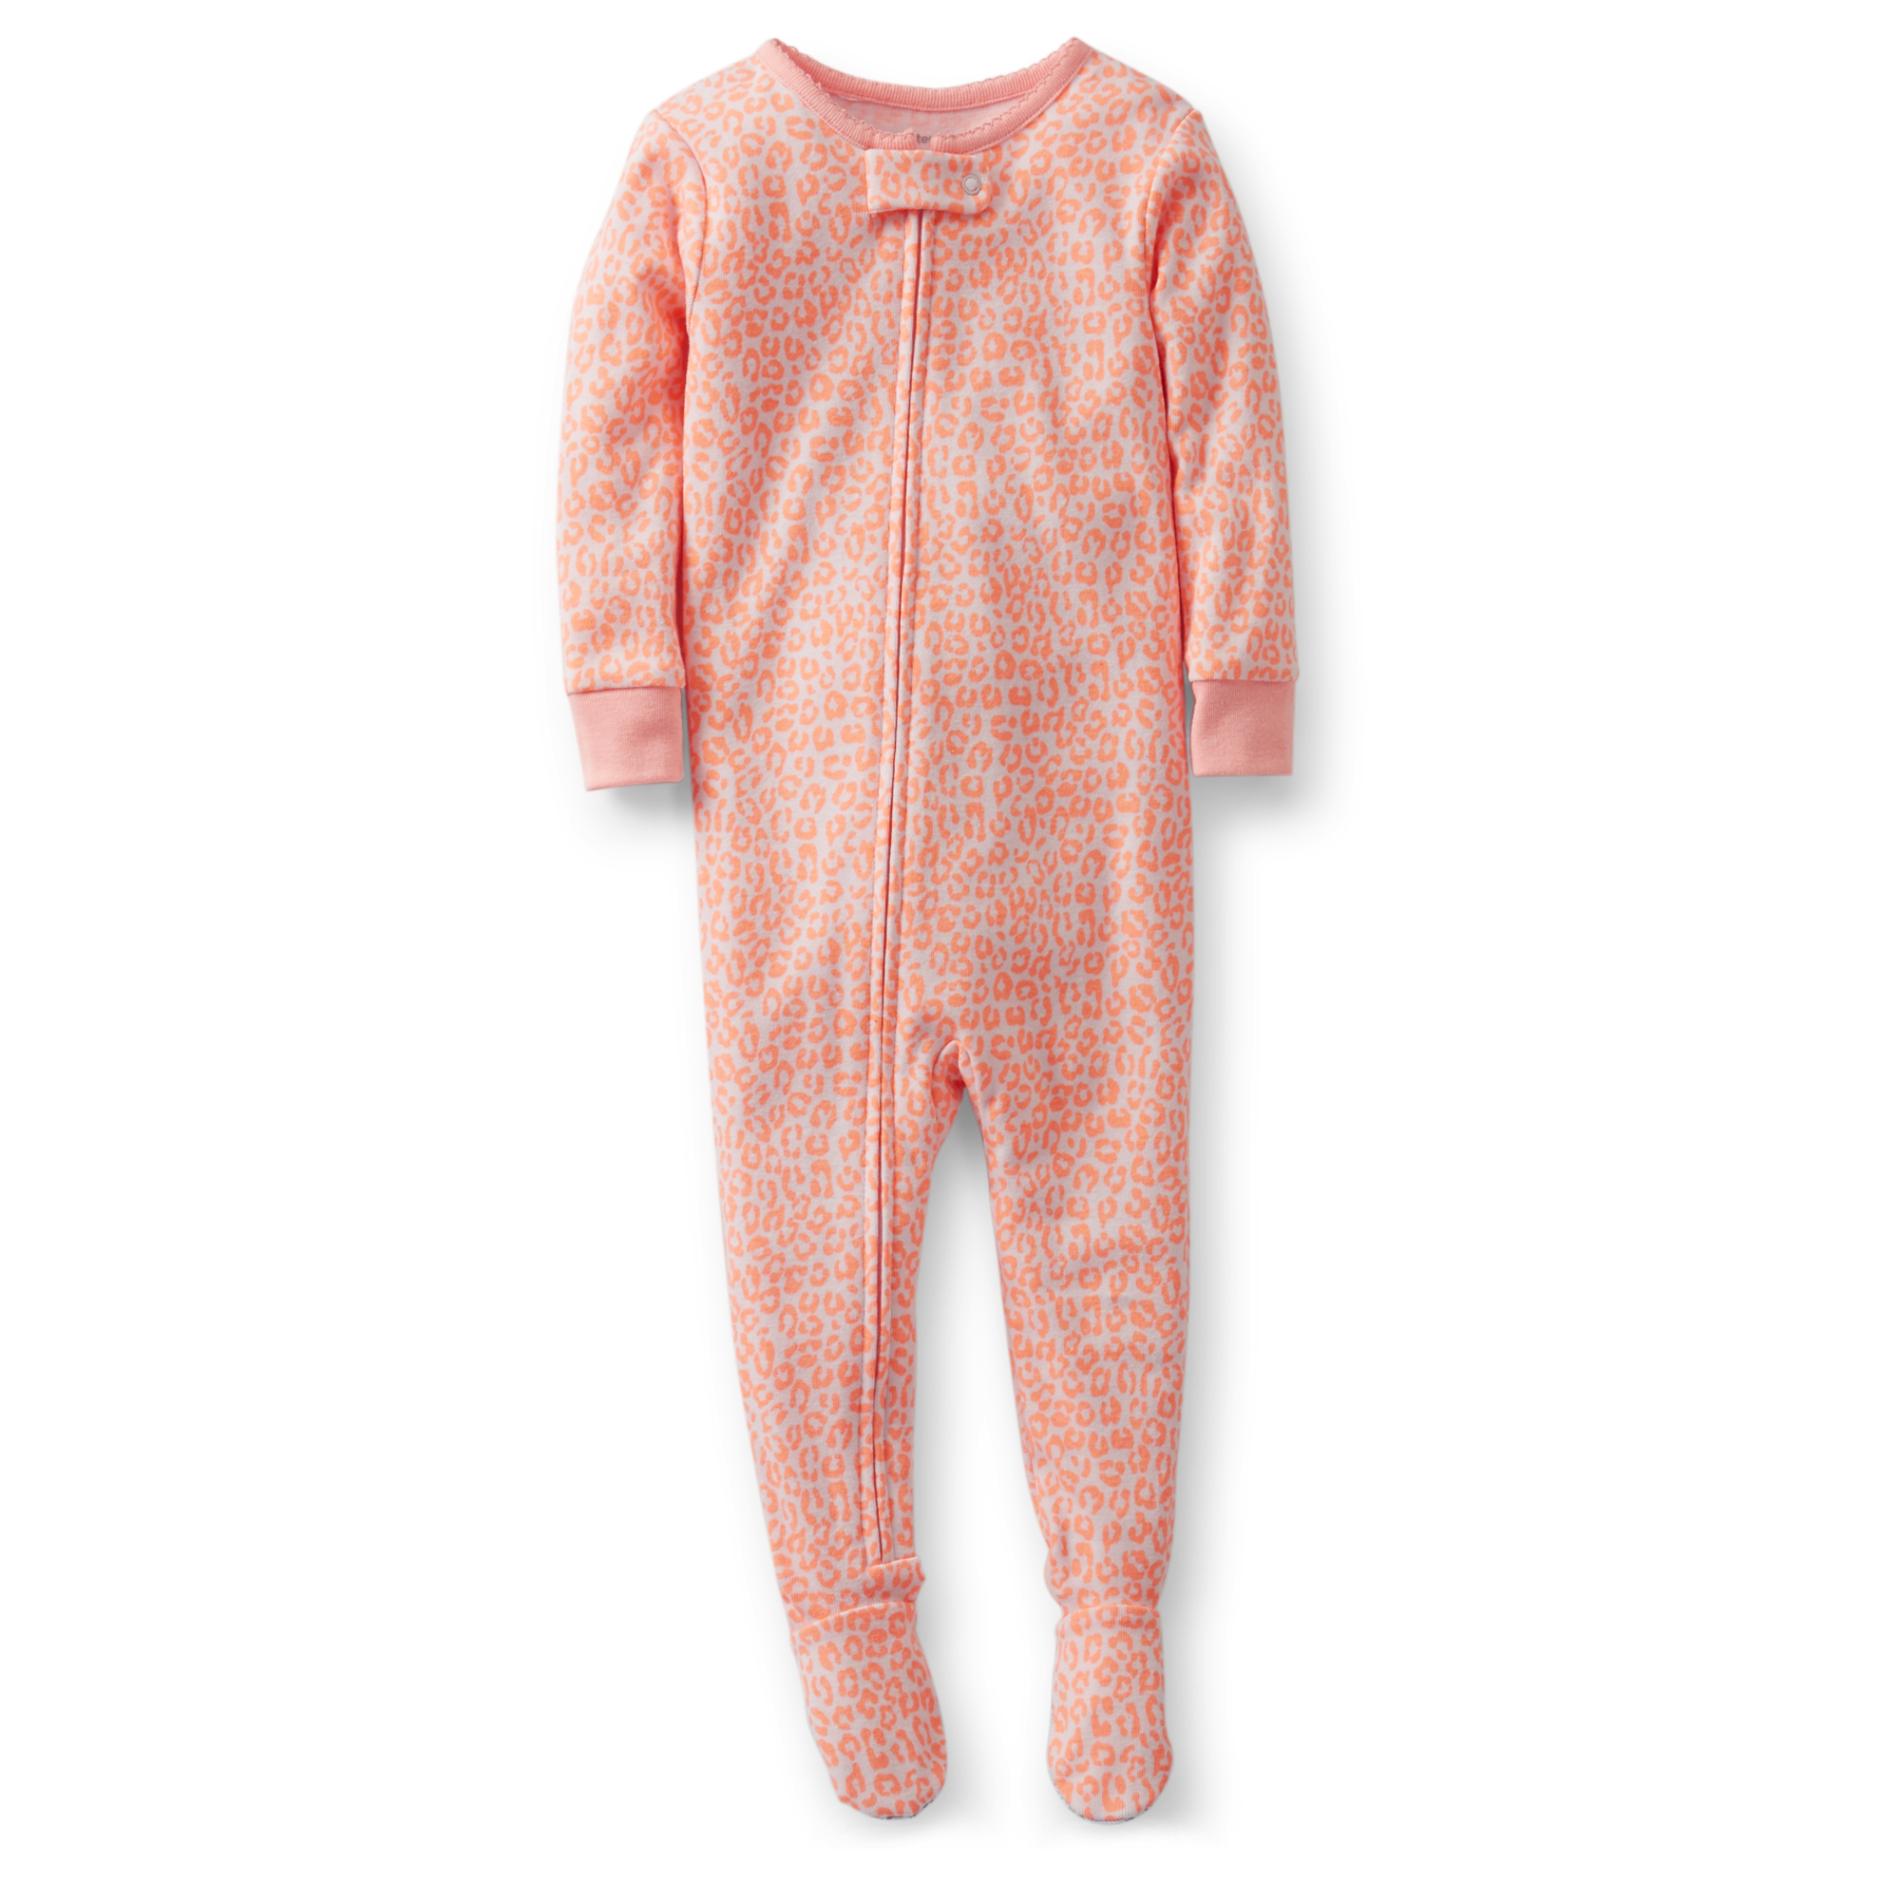 Carter's Infant Girl's Footed Pajama - Cheetah